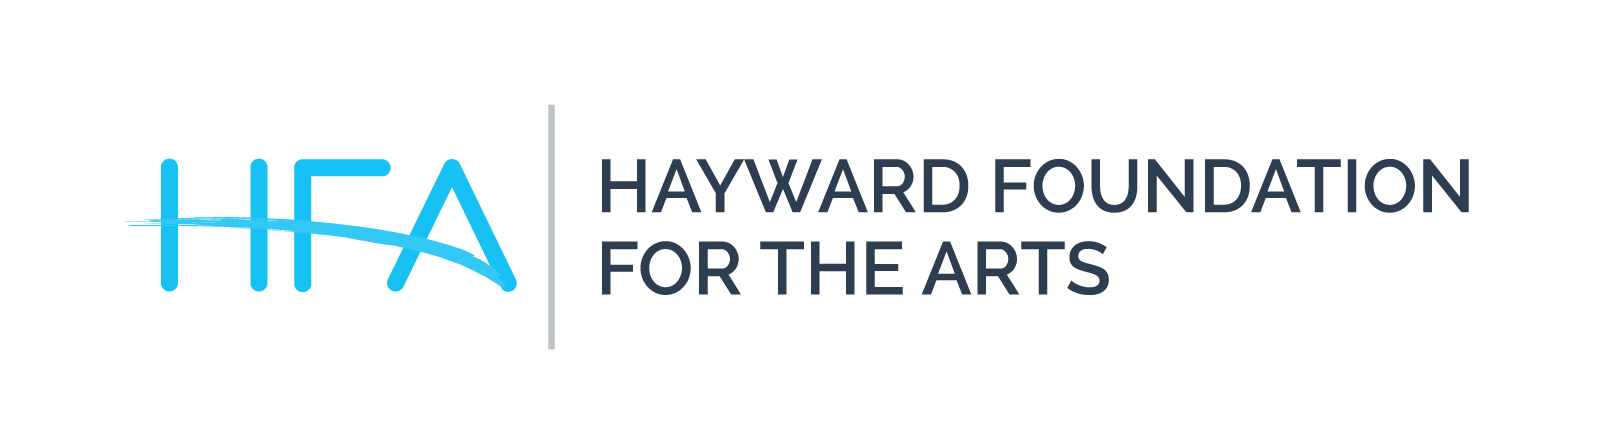 Hayward Foundation for the Arts logo